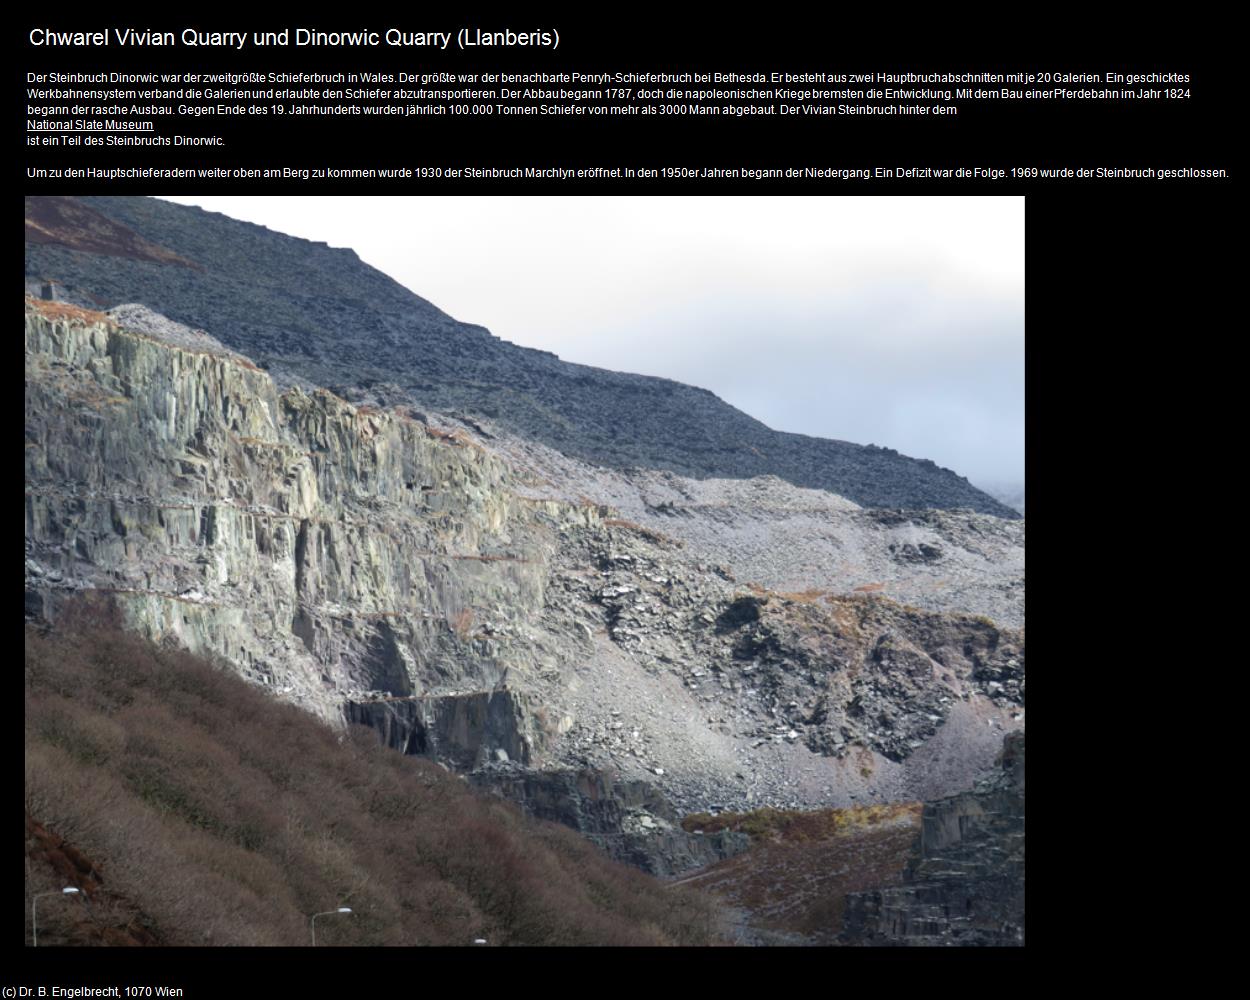 Chwarel Vivian Quarry und Dinorwic Quarry (Llanberis, Wales) in Kulturatlas-ENGLAND und WALES(c)B.Engelbrecht